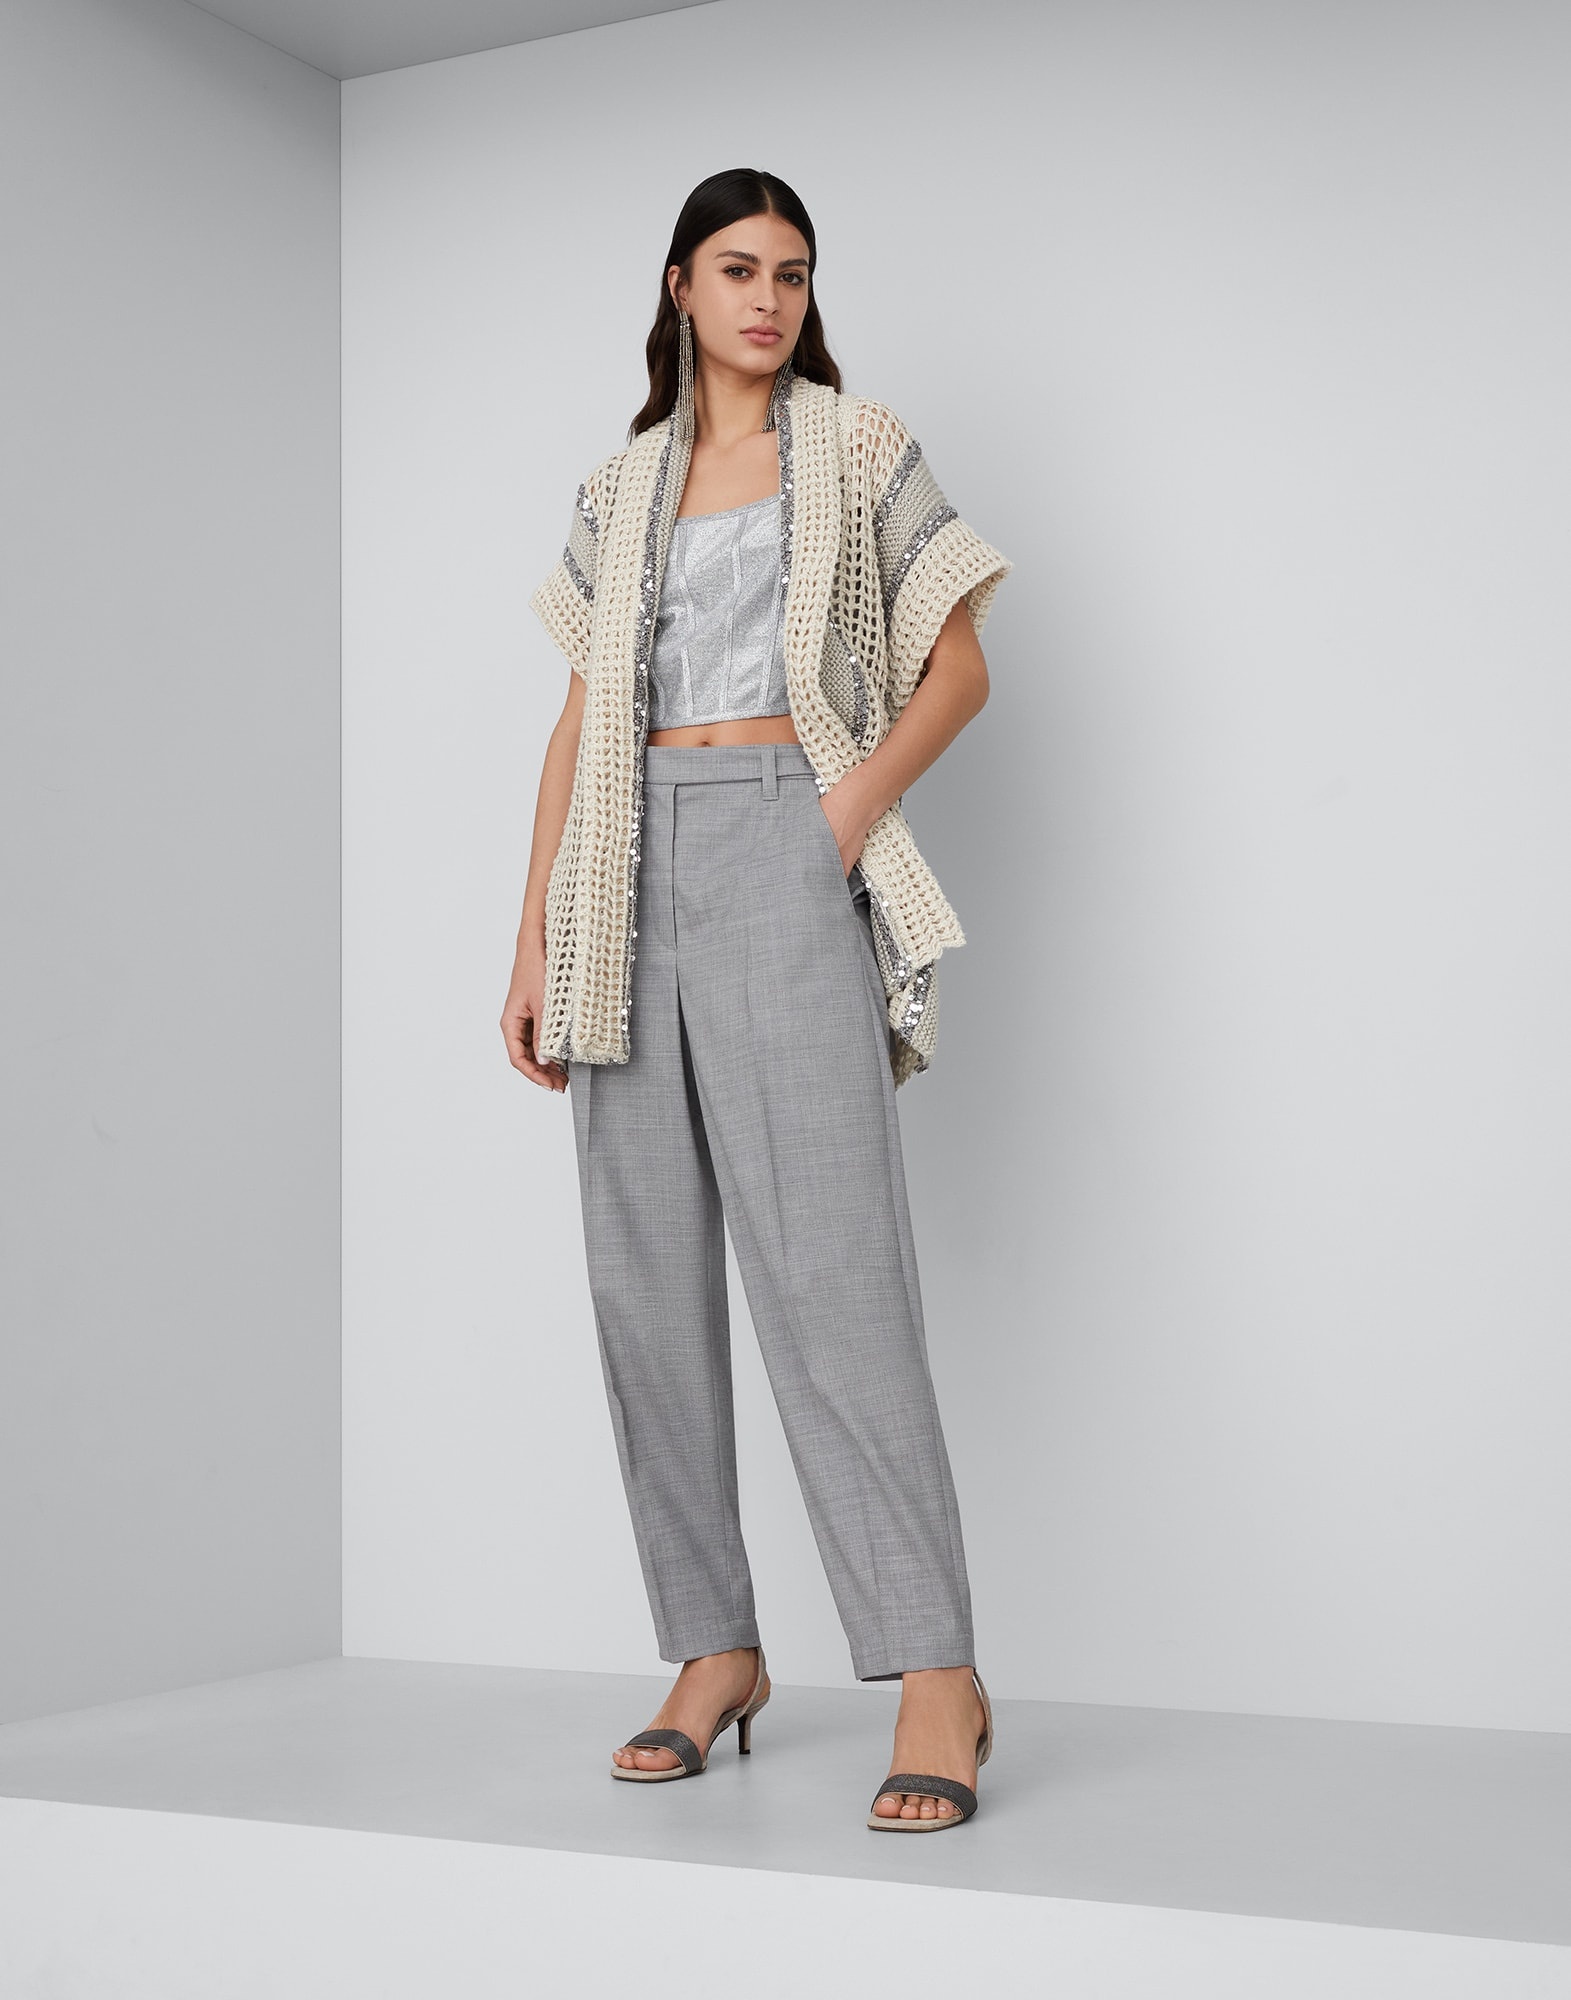 Dazzling stripe net knit cardigan in jute, linen, cotton and silk with belt - 5